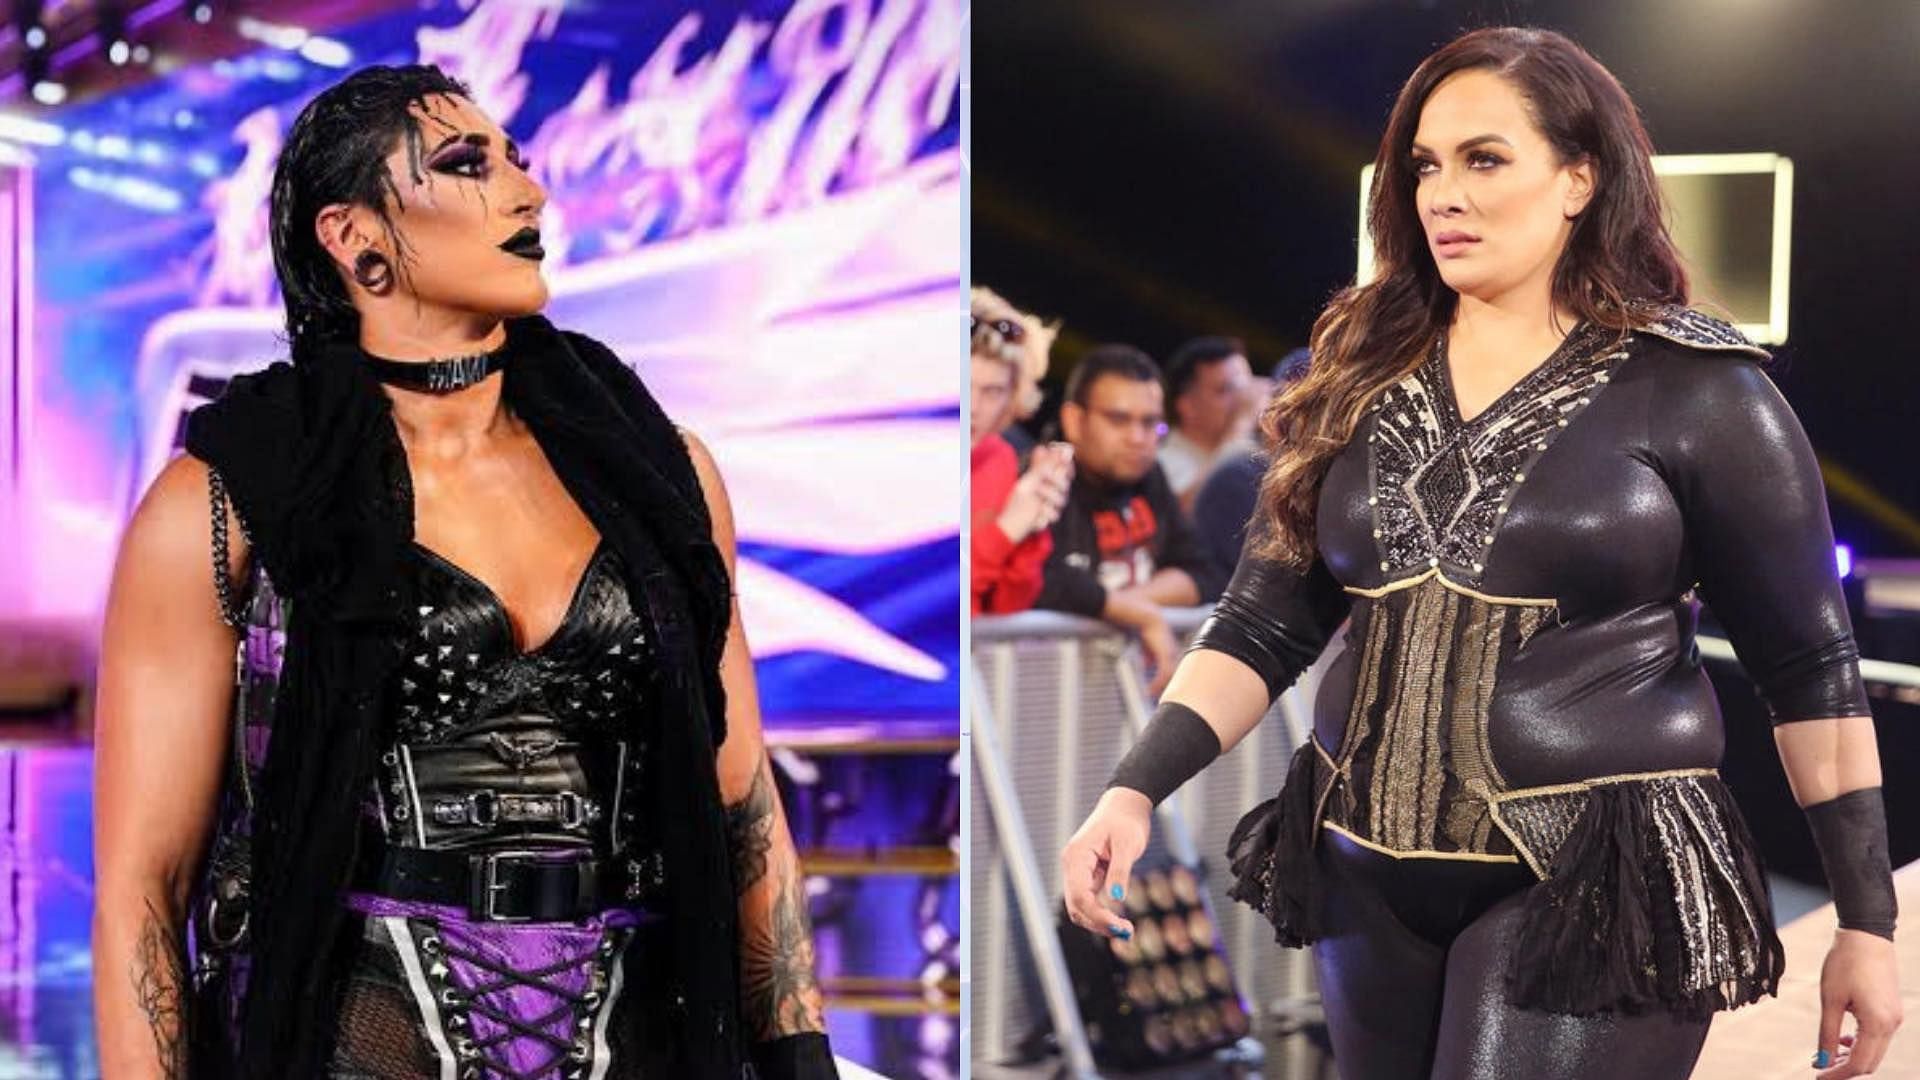 Rhea Ripley and Nia Jax will clash at WWE